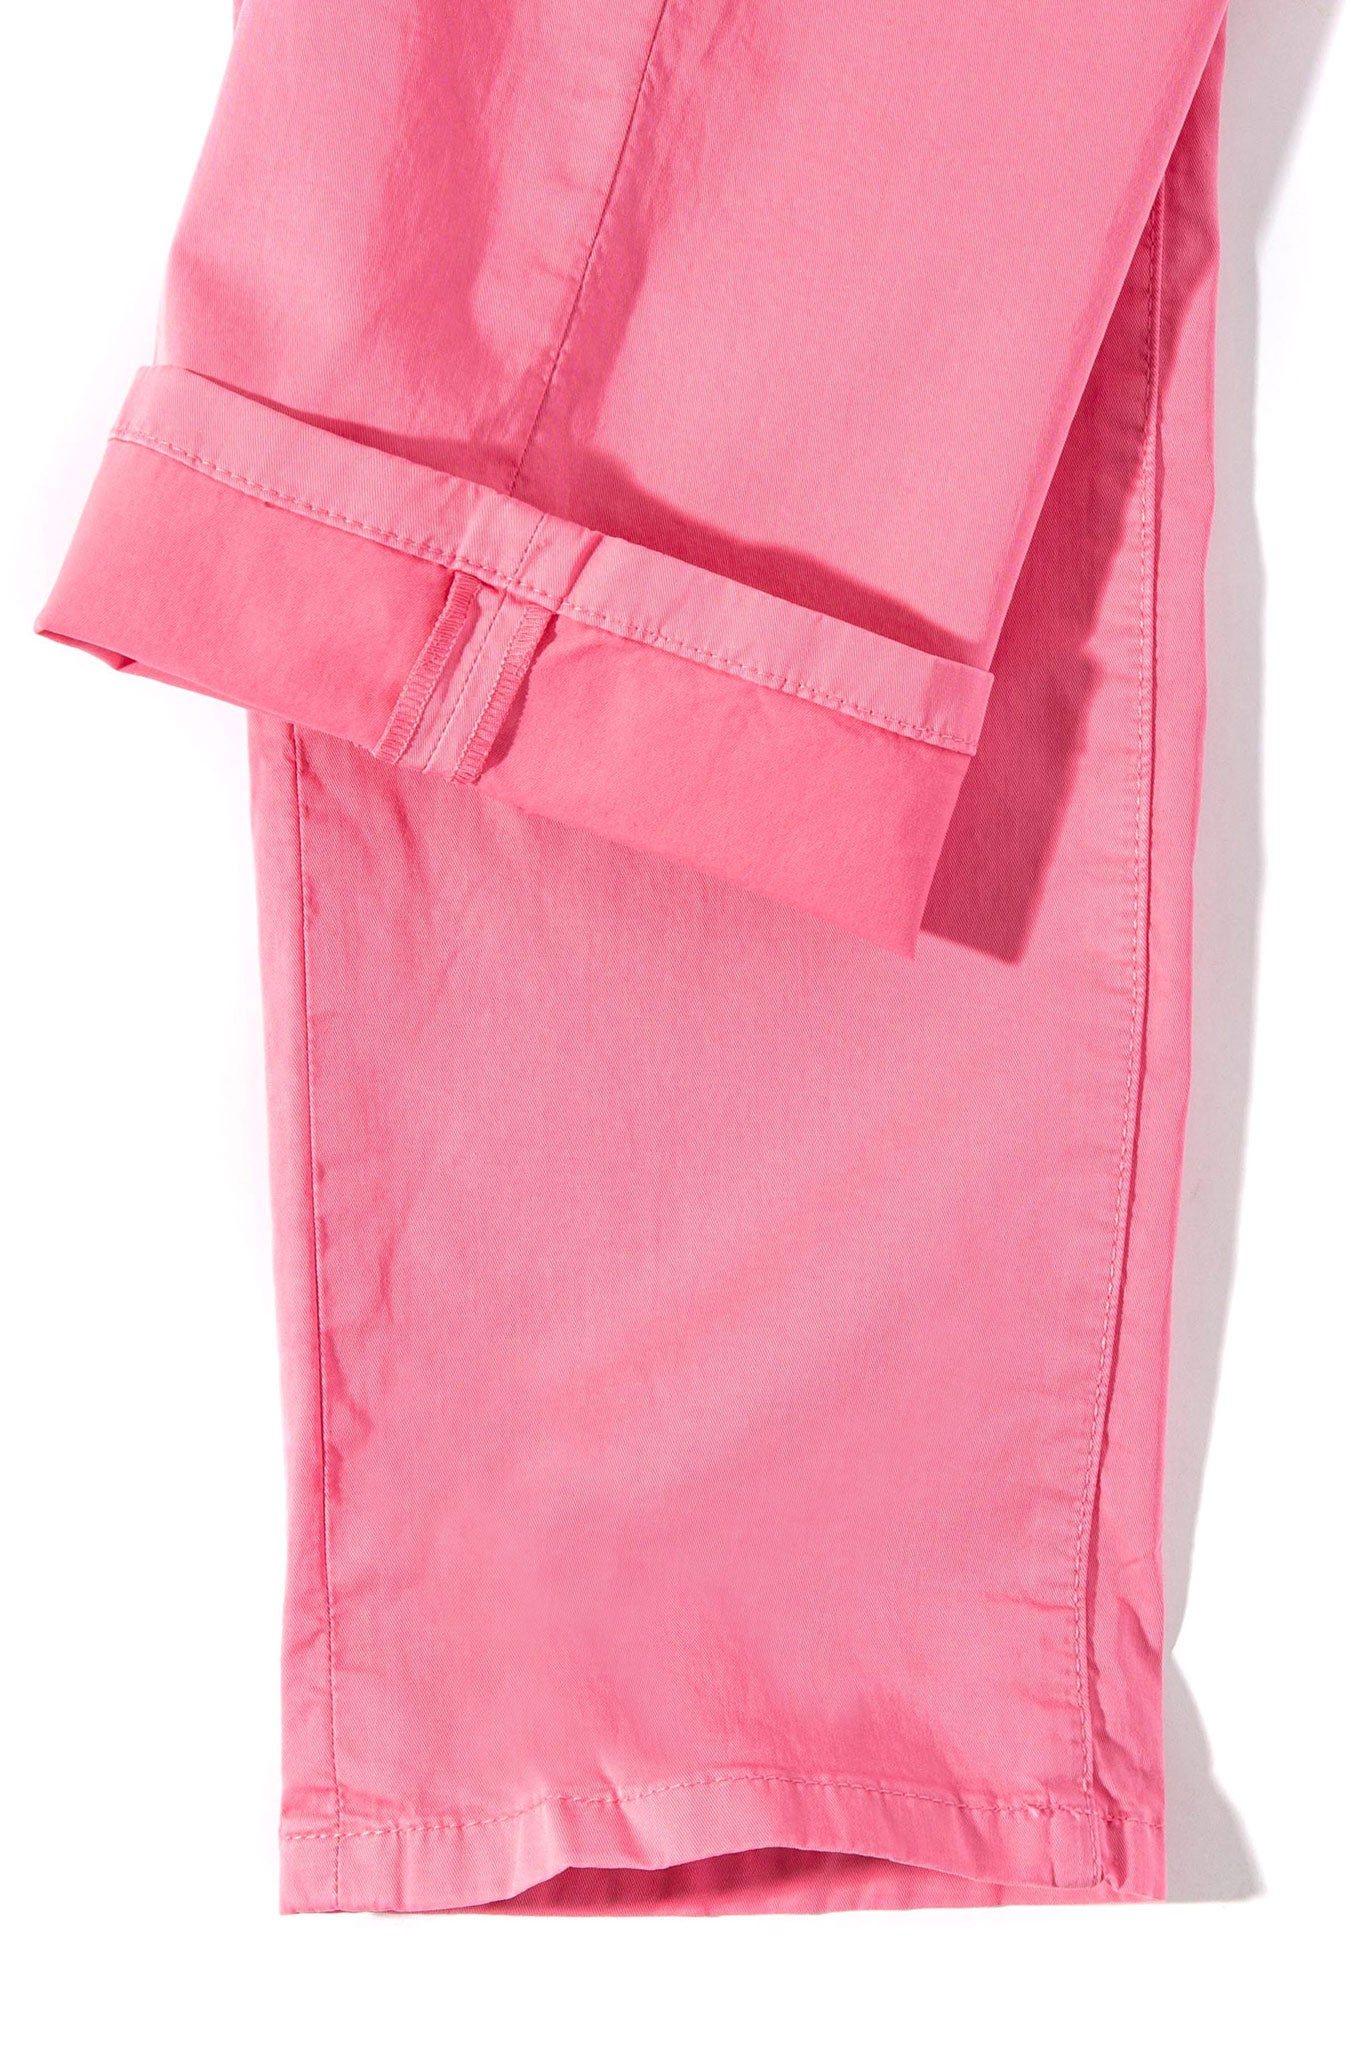 Fowler Ultralight Performance Pant In Pink | Mens - Pants - 5 Pocket | Teleria Zed